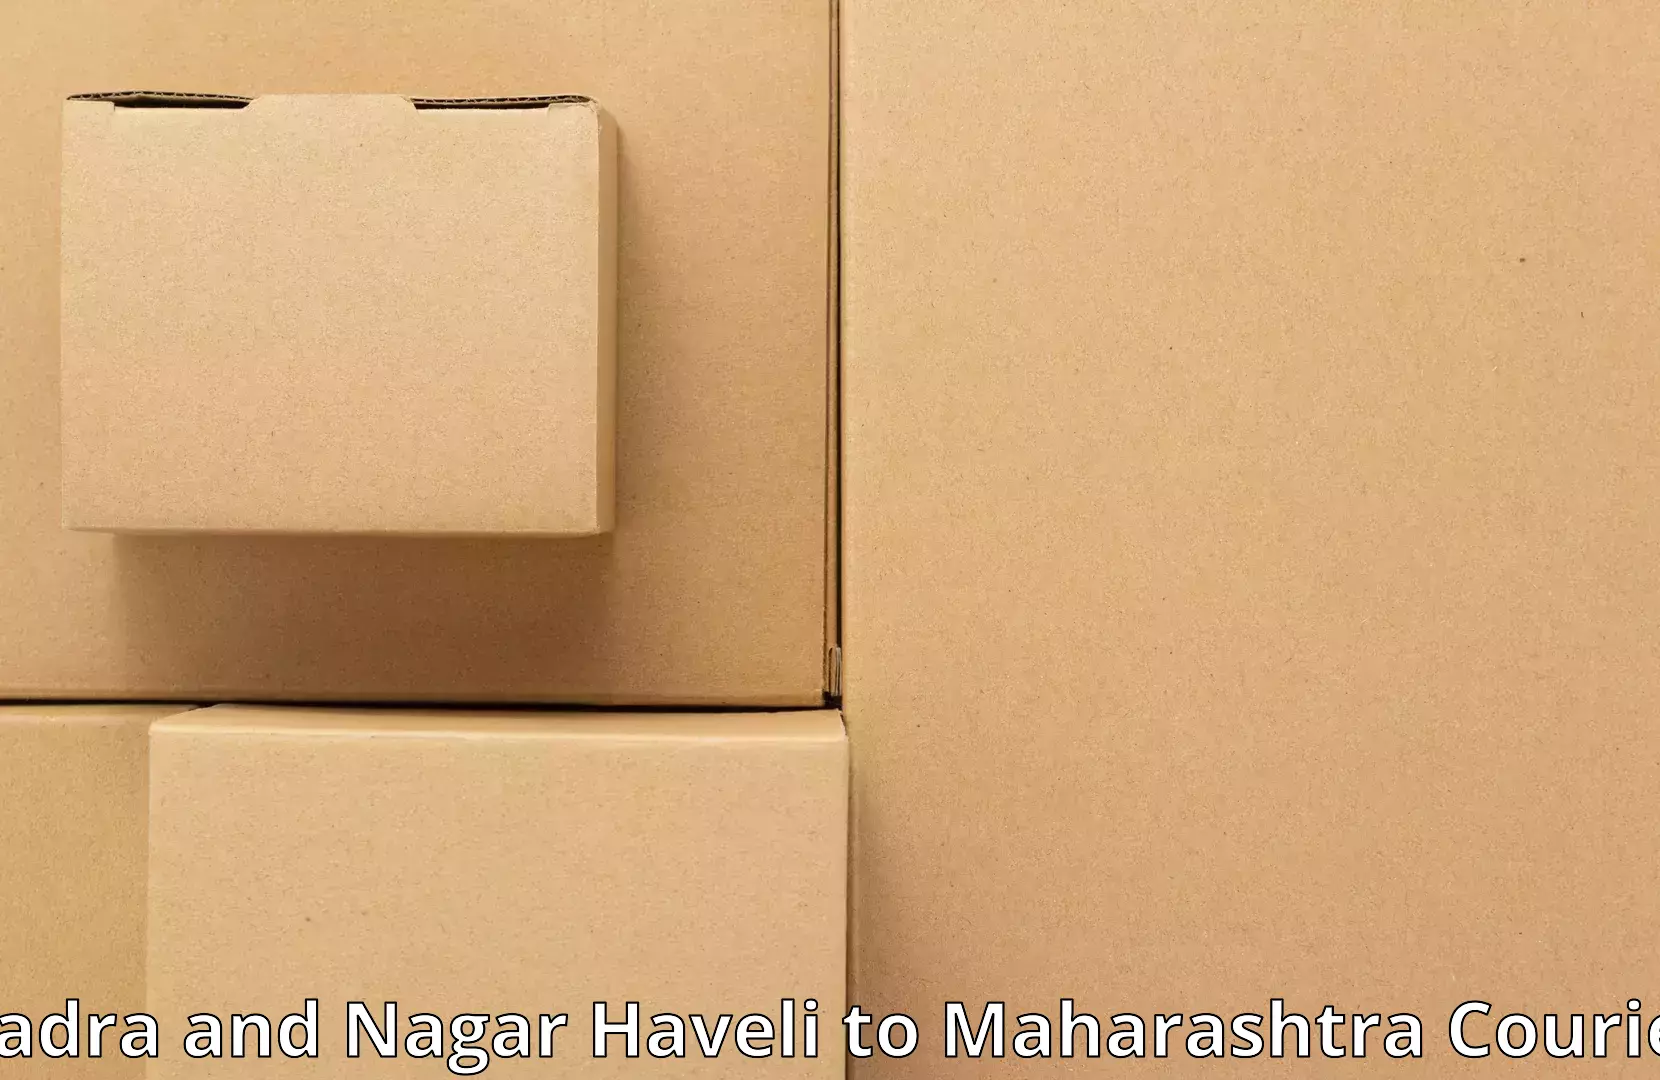 Professional moving company Dadra and Nagar Haveli to Nashik